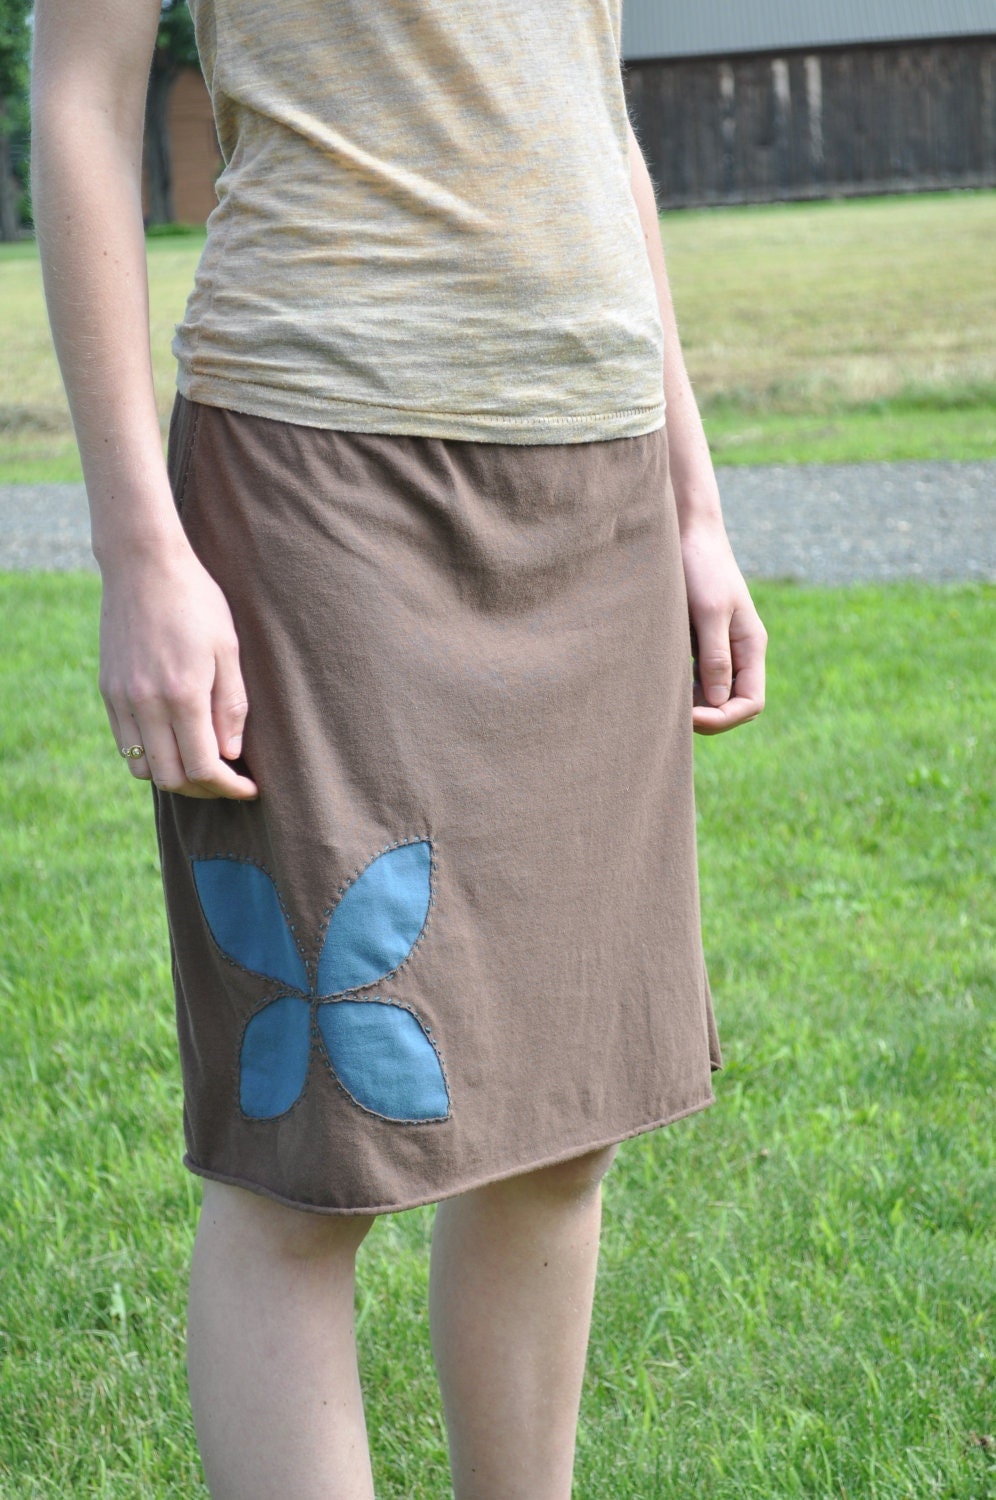 Reverse Applique Skirt by nicoleblum on Etsy